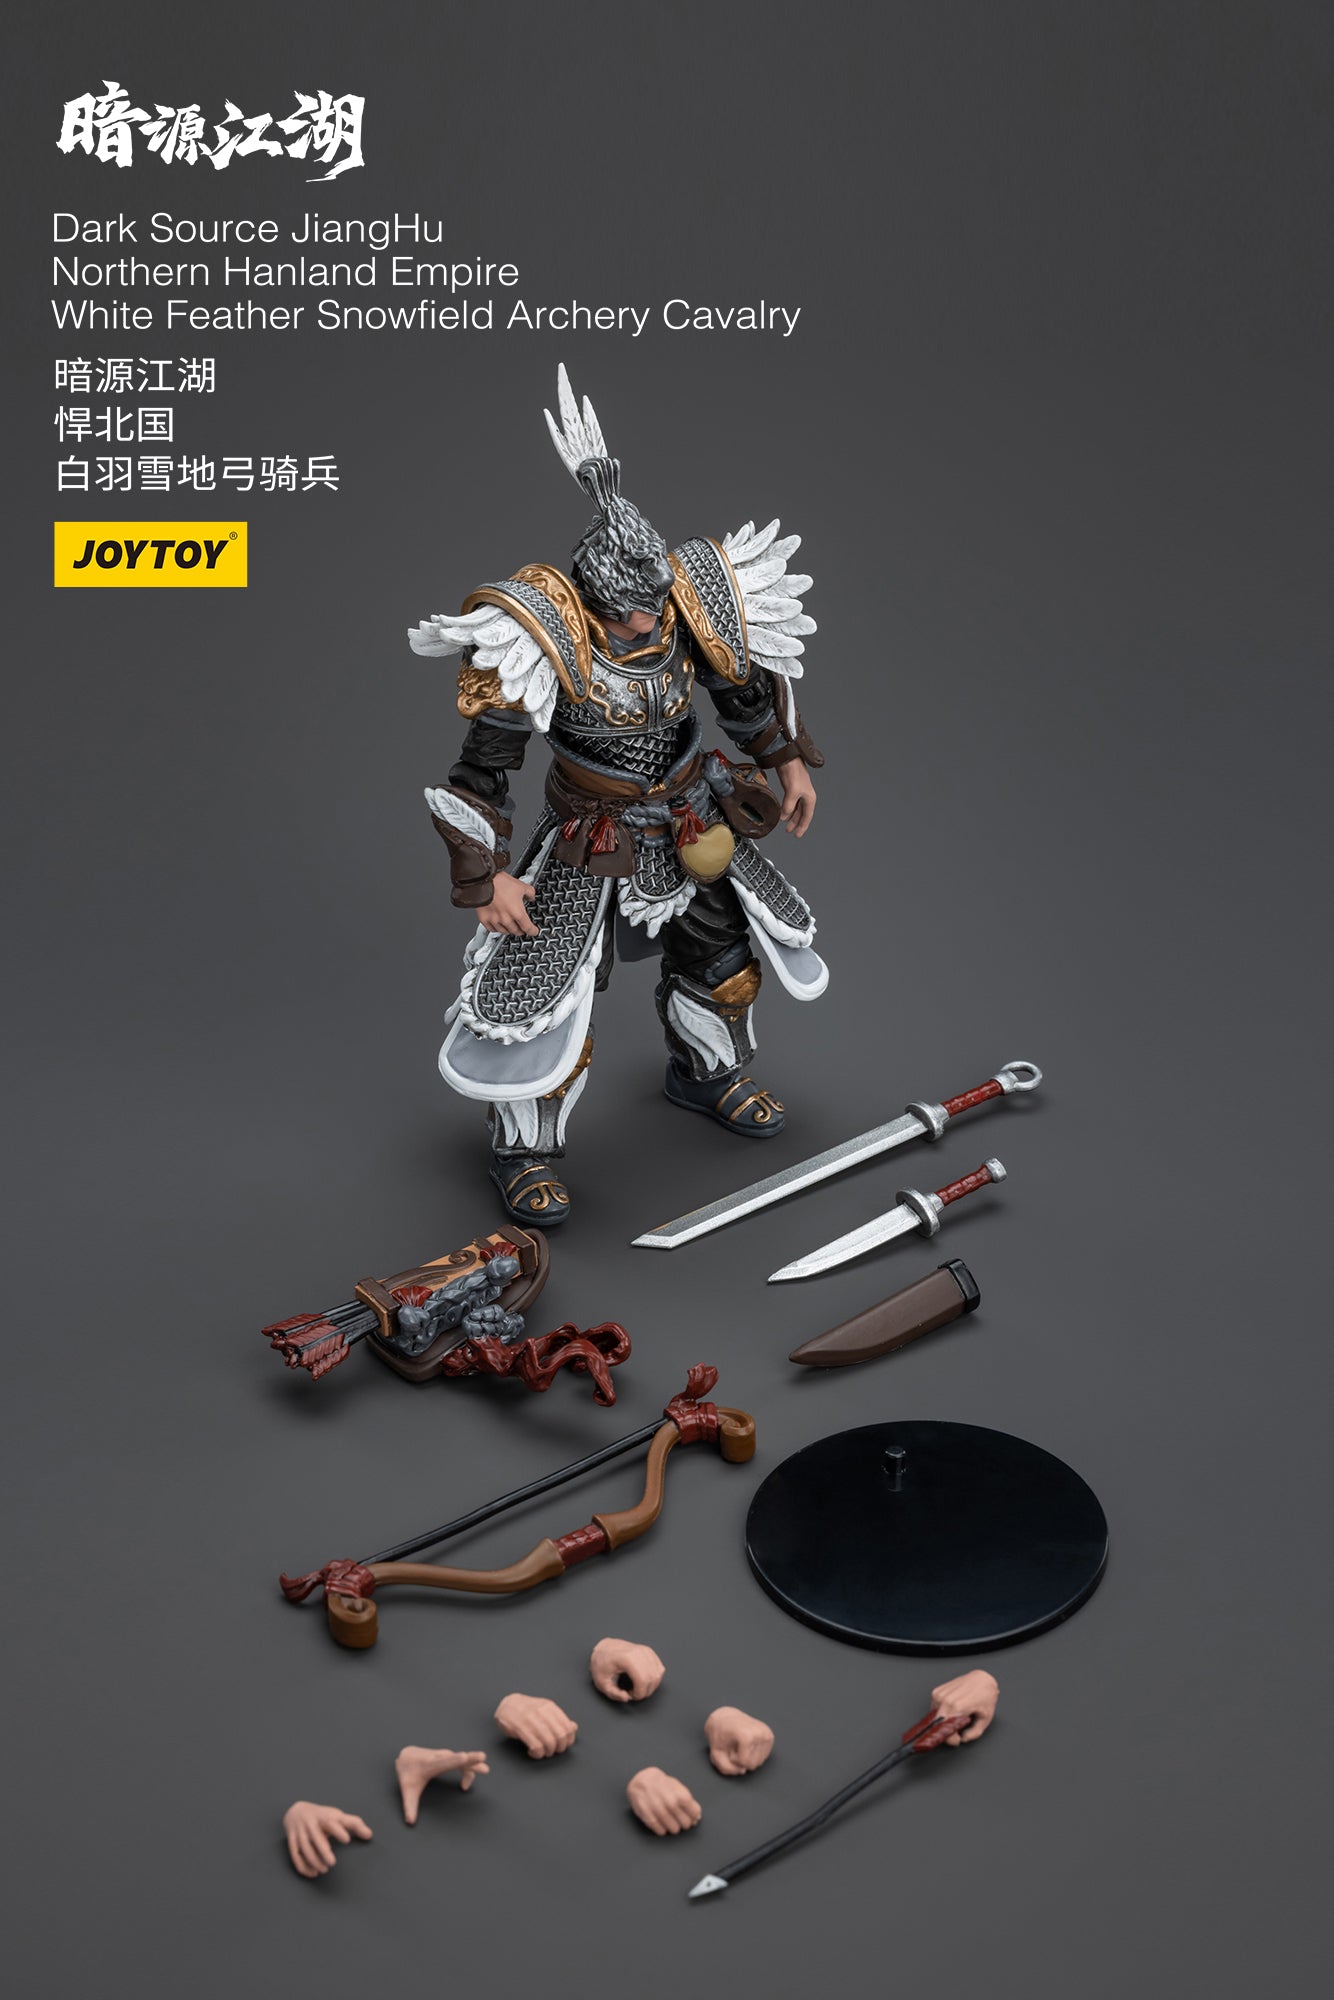 Dark Source - JiangHu Northern Hanland Empire White Feather Snowfield Archery Cavalry Set - 1/18 Action Figure By Joytoy